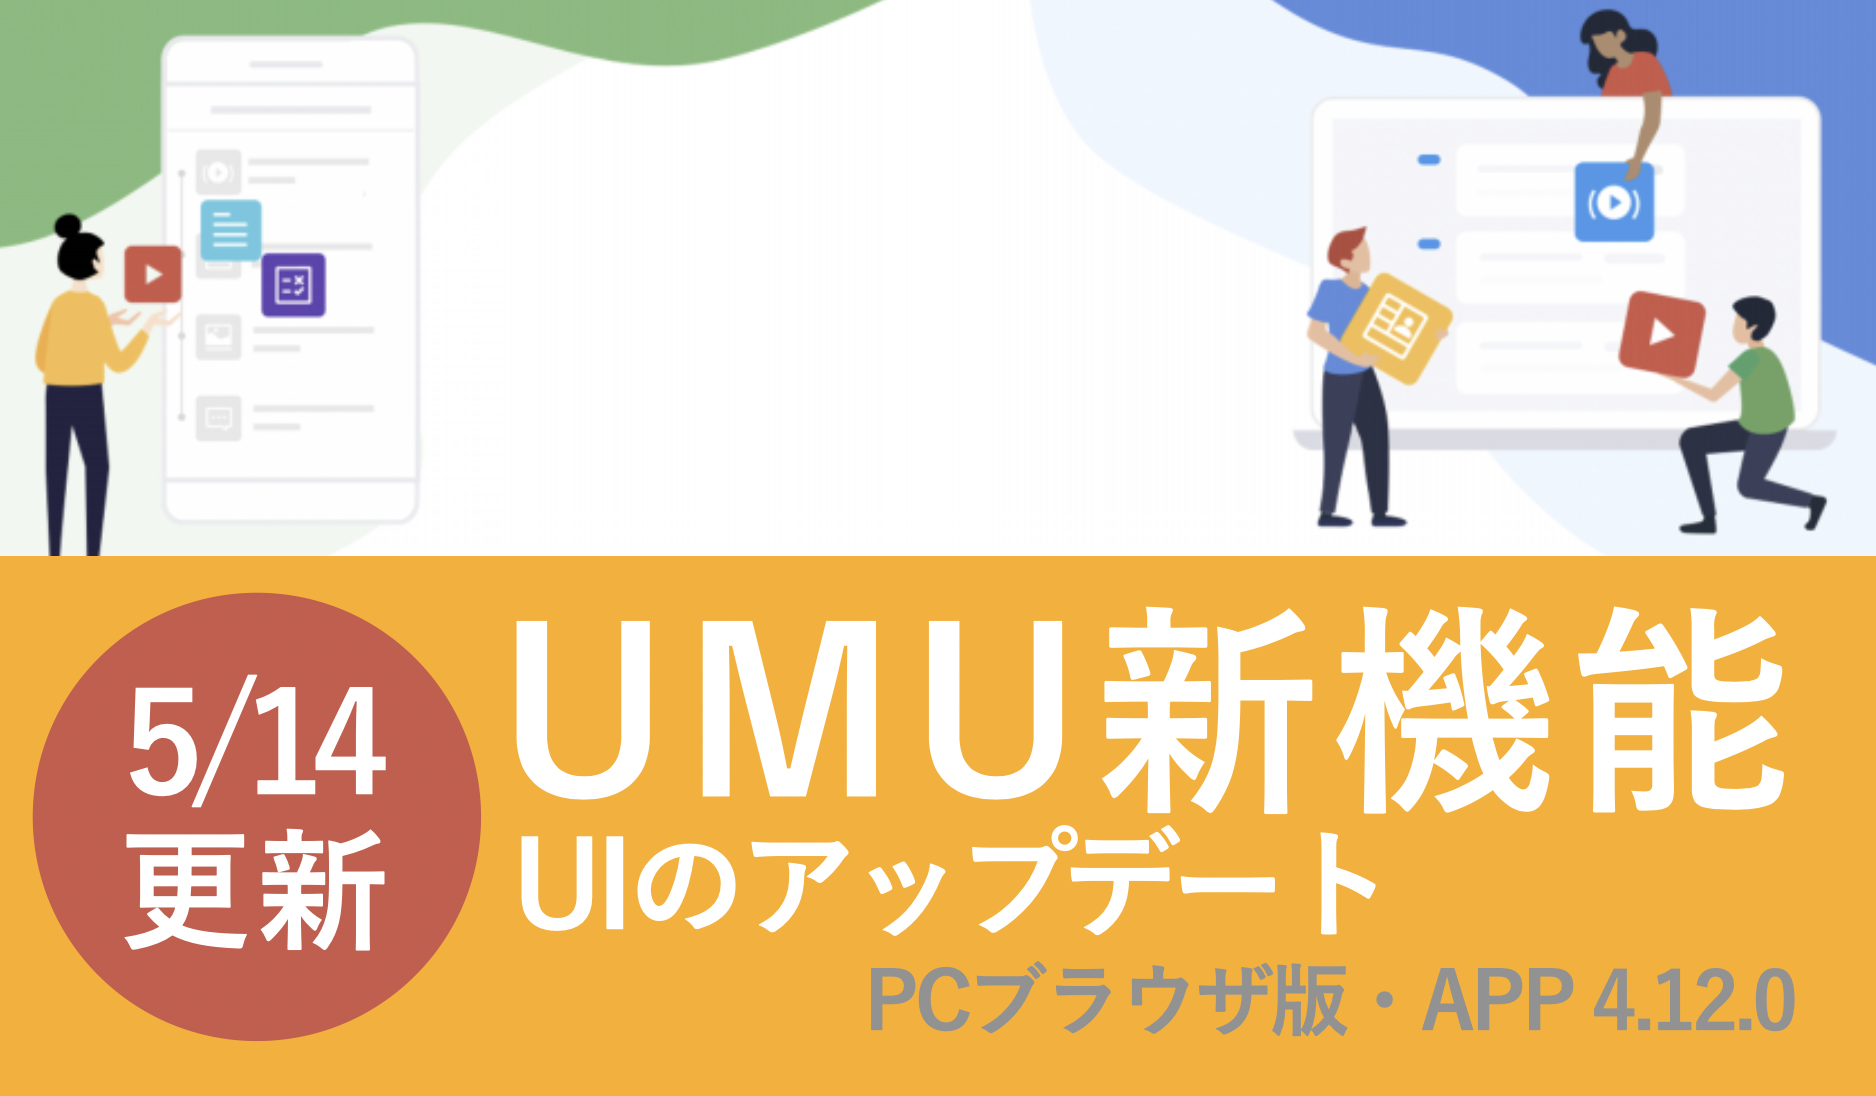 UMU新機能】 UMU Enterprise版のホーム画面がアップデートされました ...